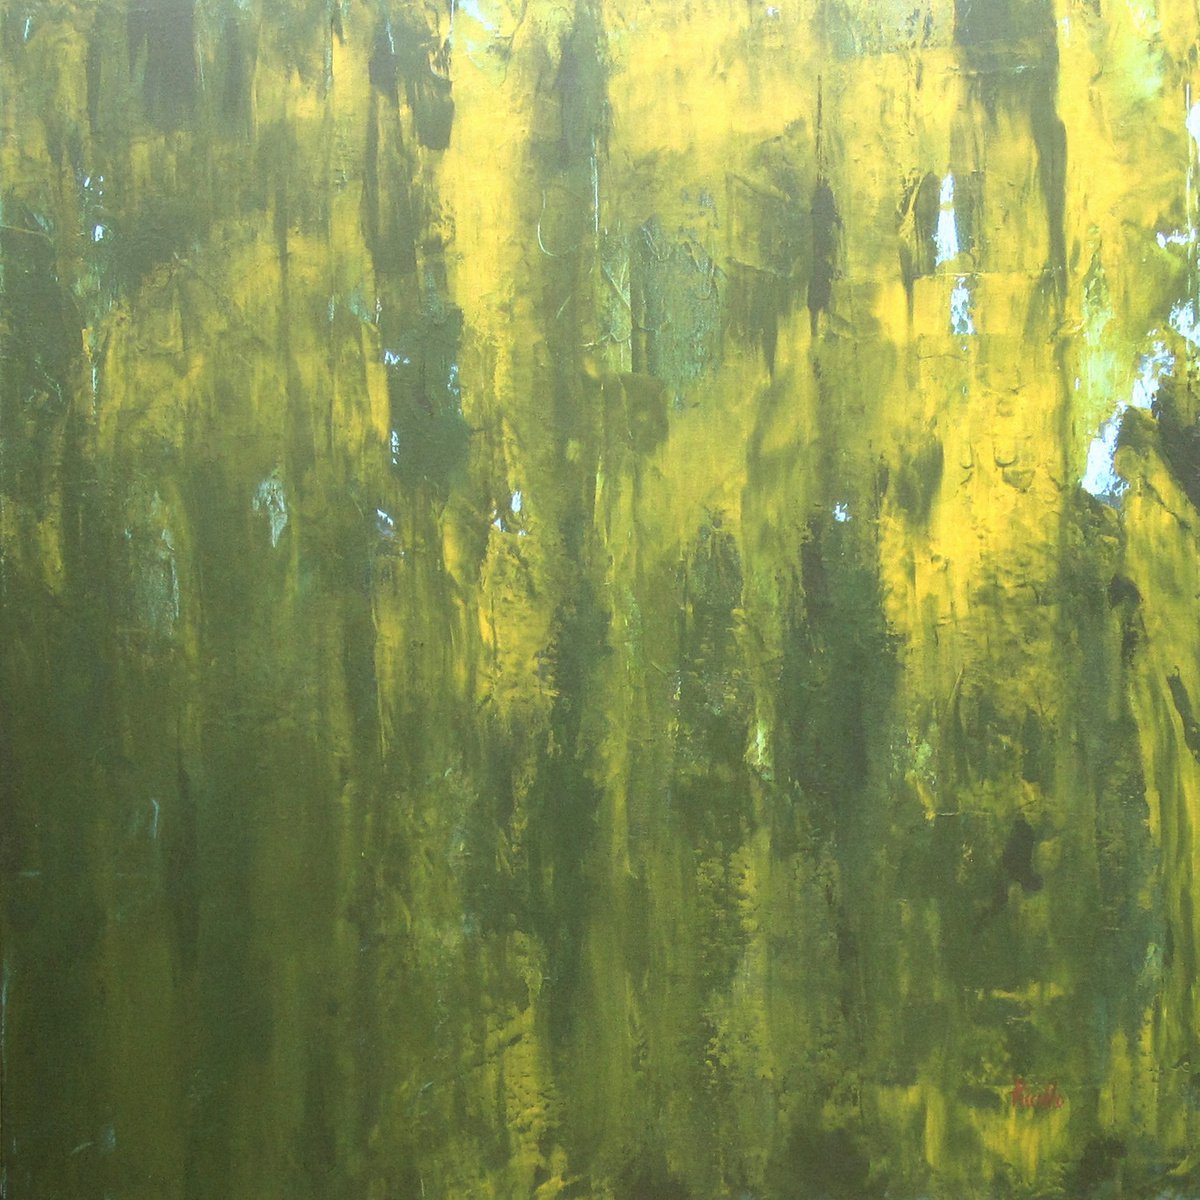 In The Mangroves by Joseph Piccillo